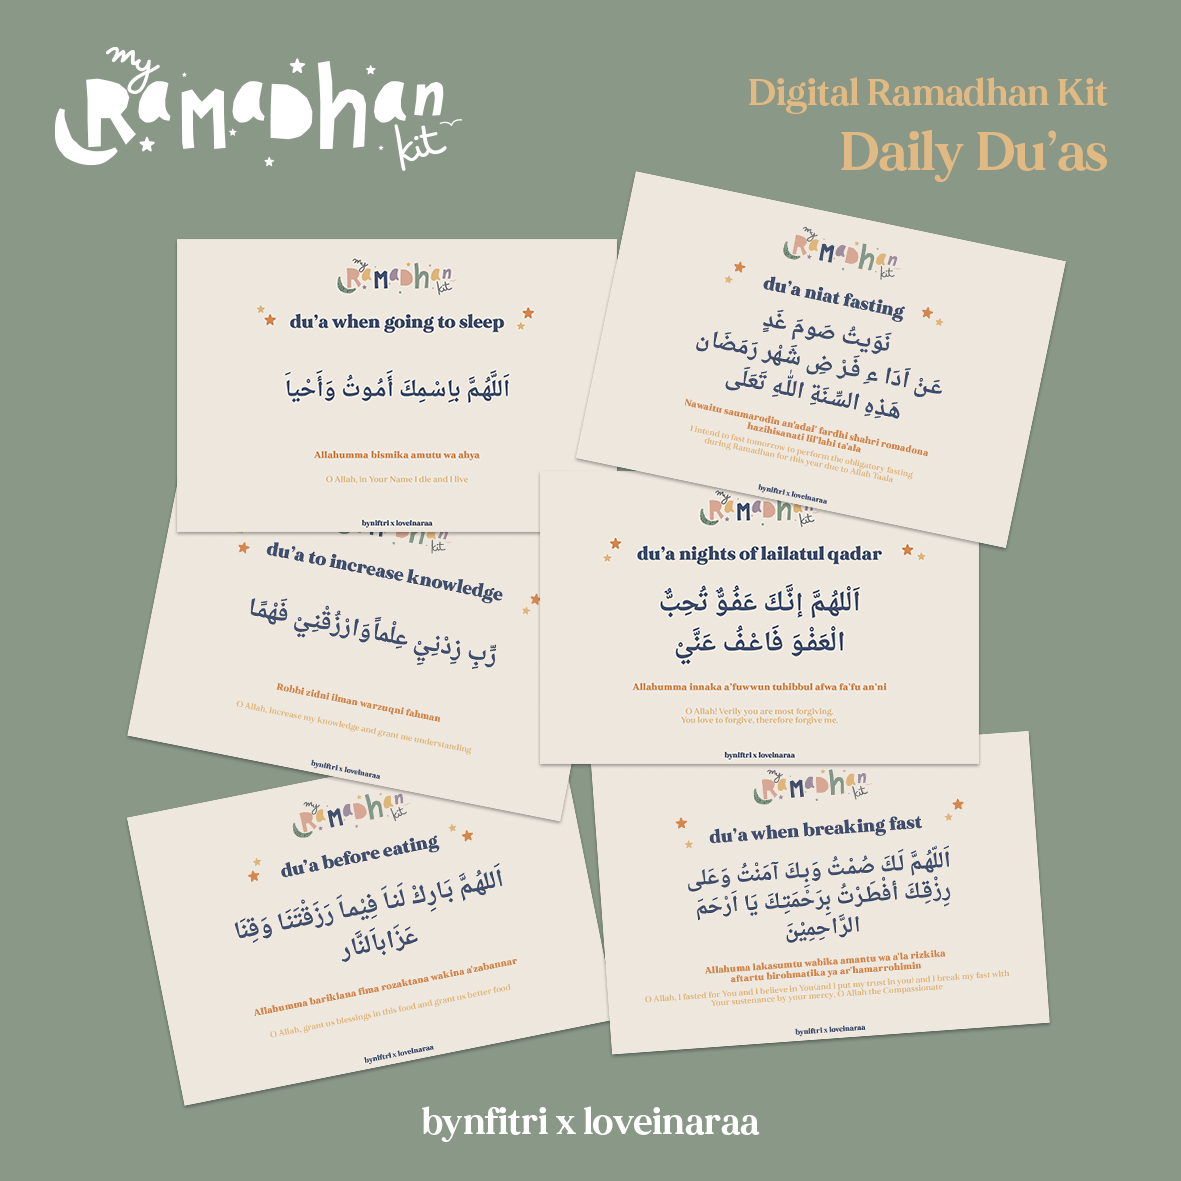 Digital Ramadhan Kit